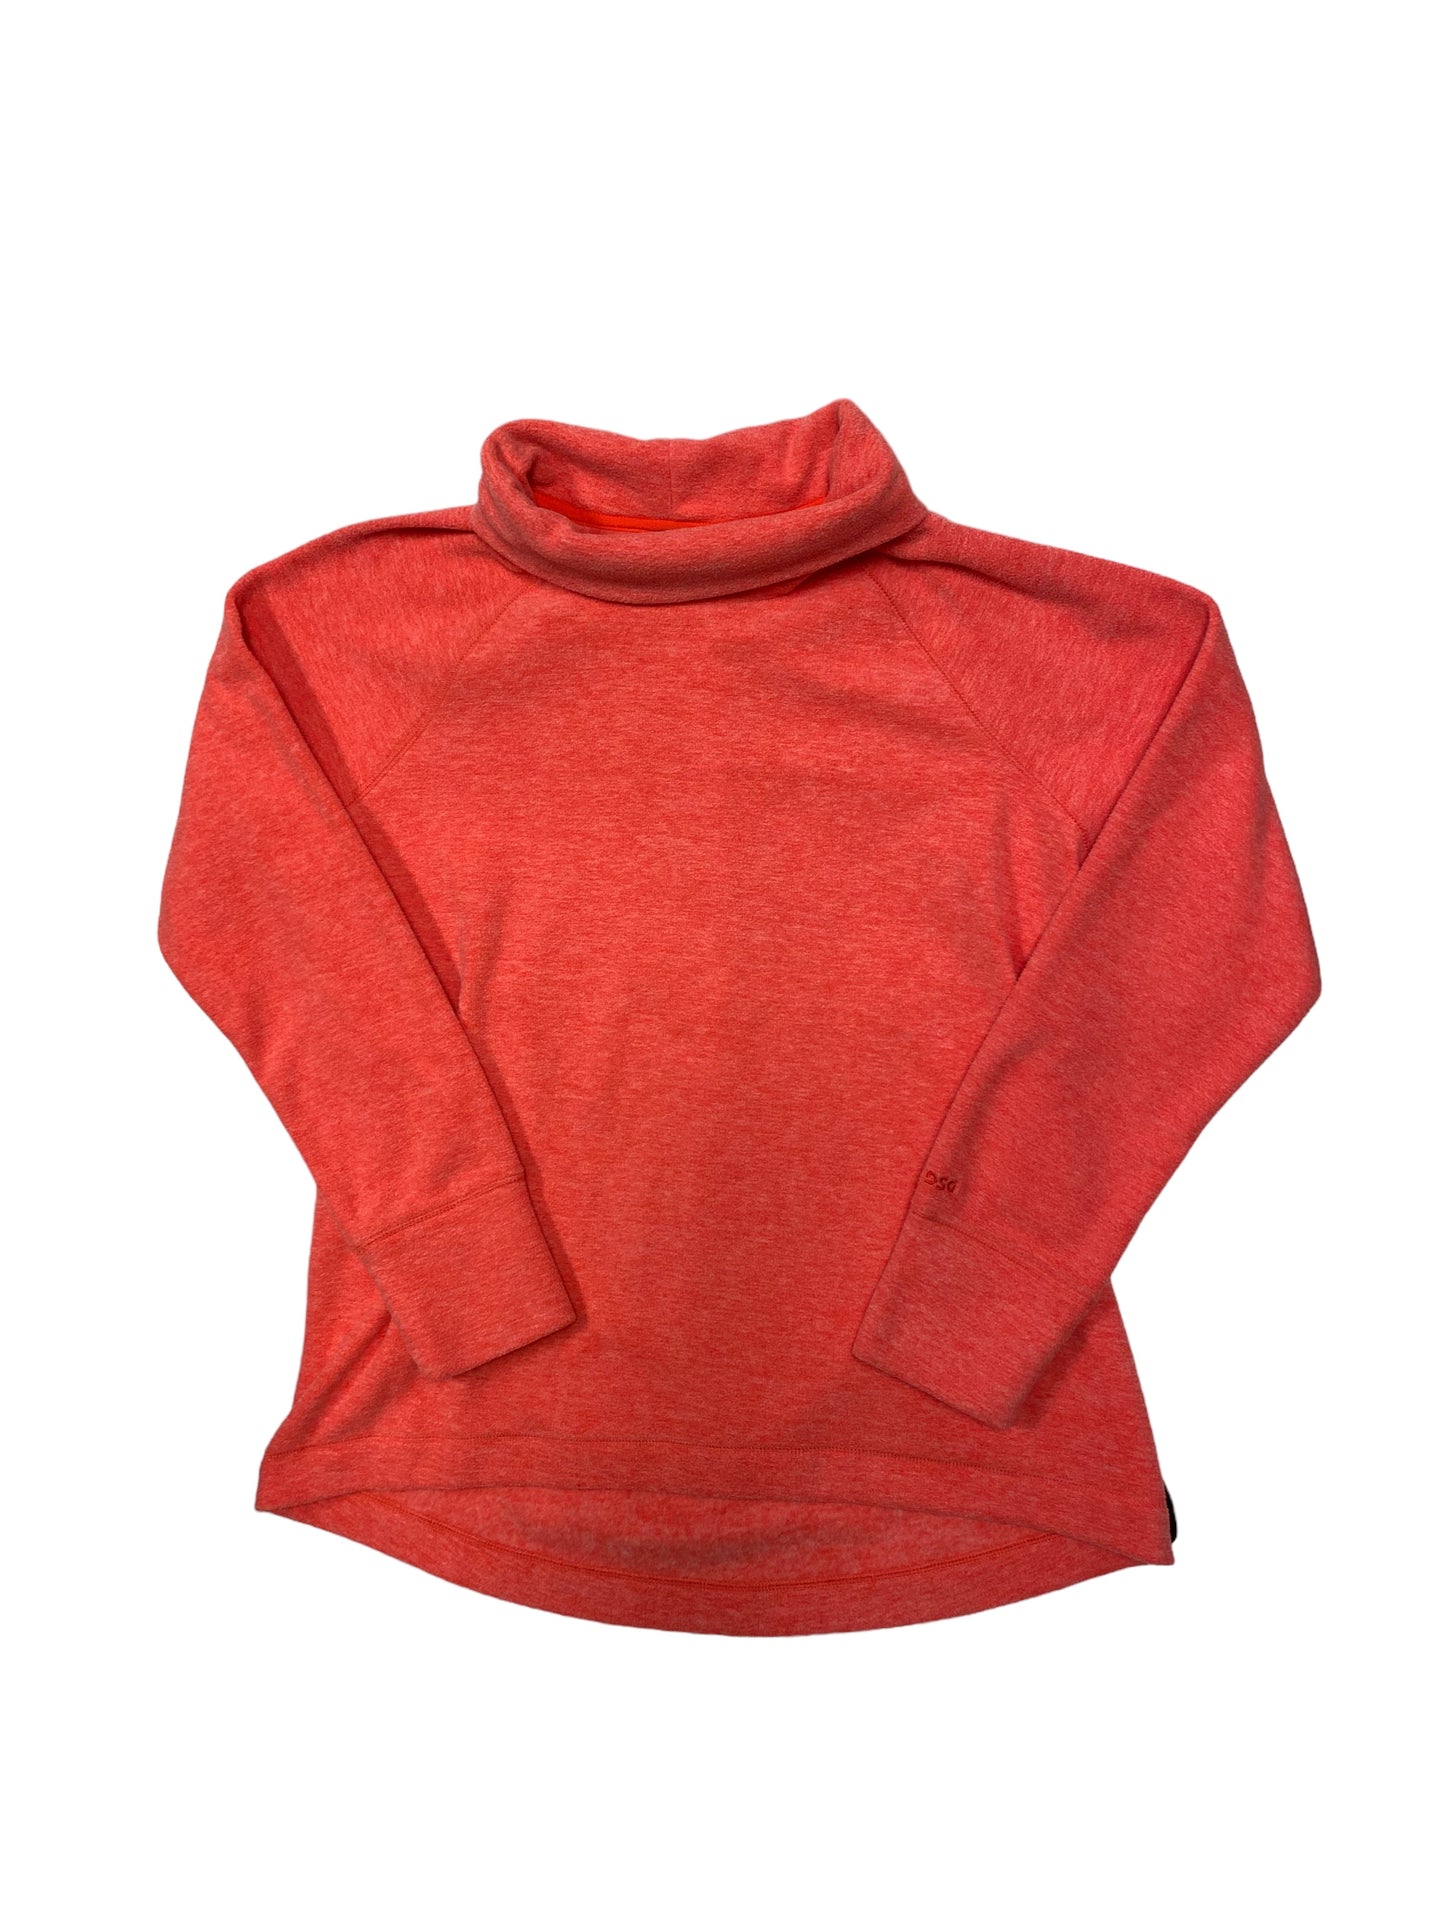 Pink Athletic Sweatshirt Crewneck Dsg Outerwear, Size L